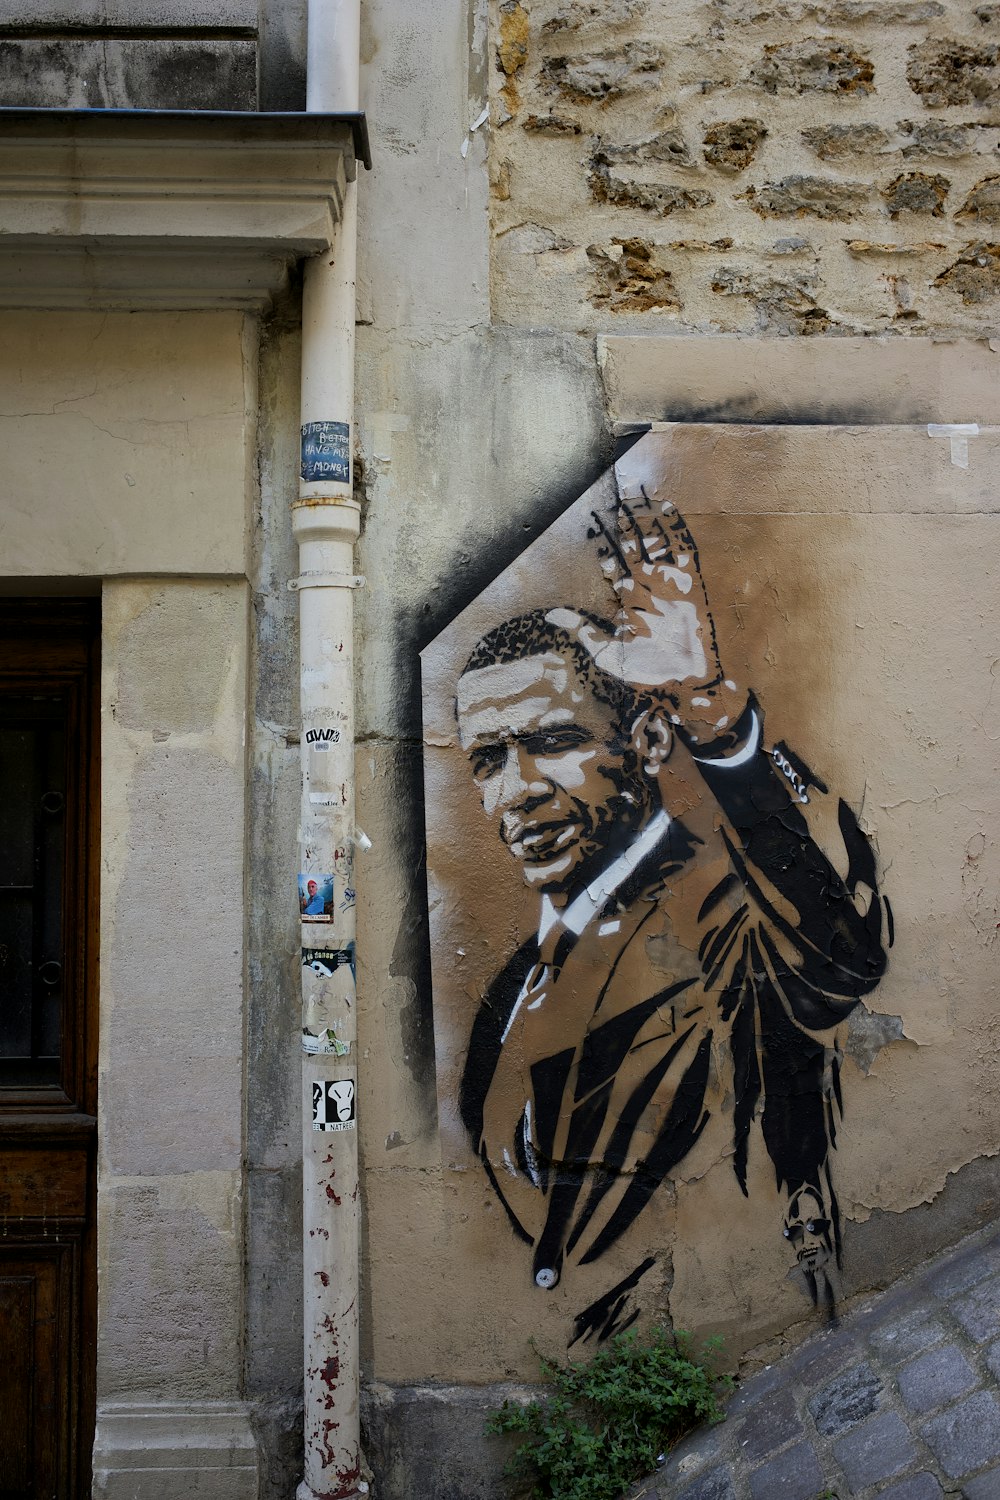 Barrack Obama mural